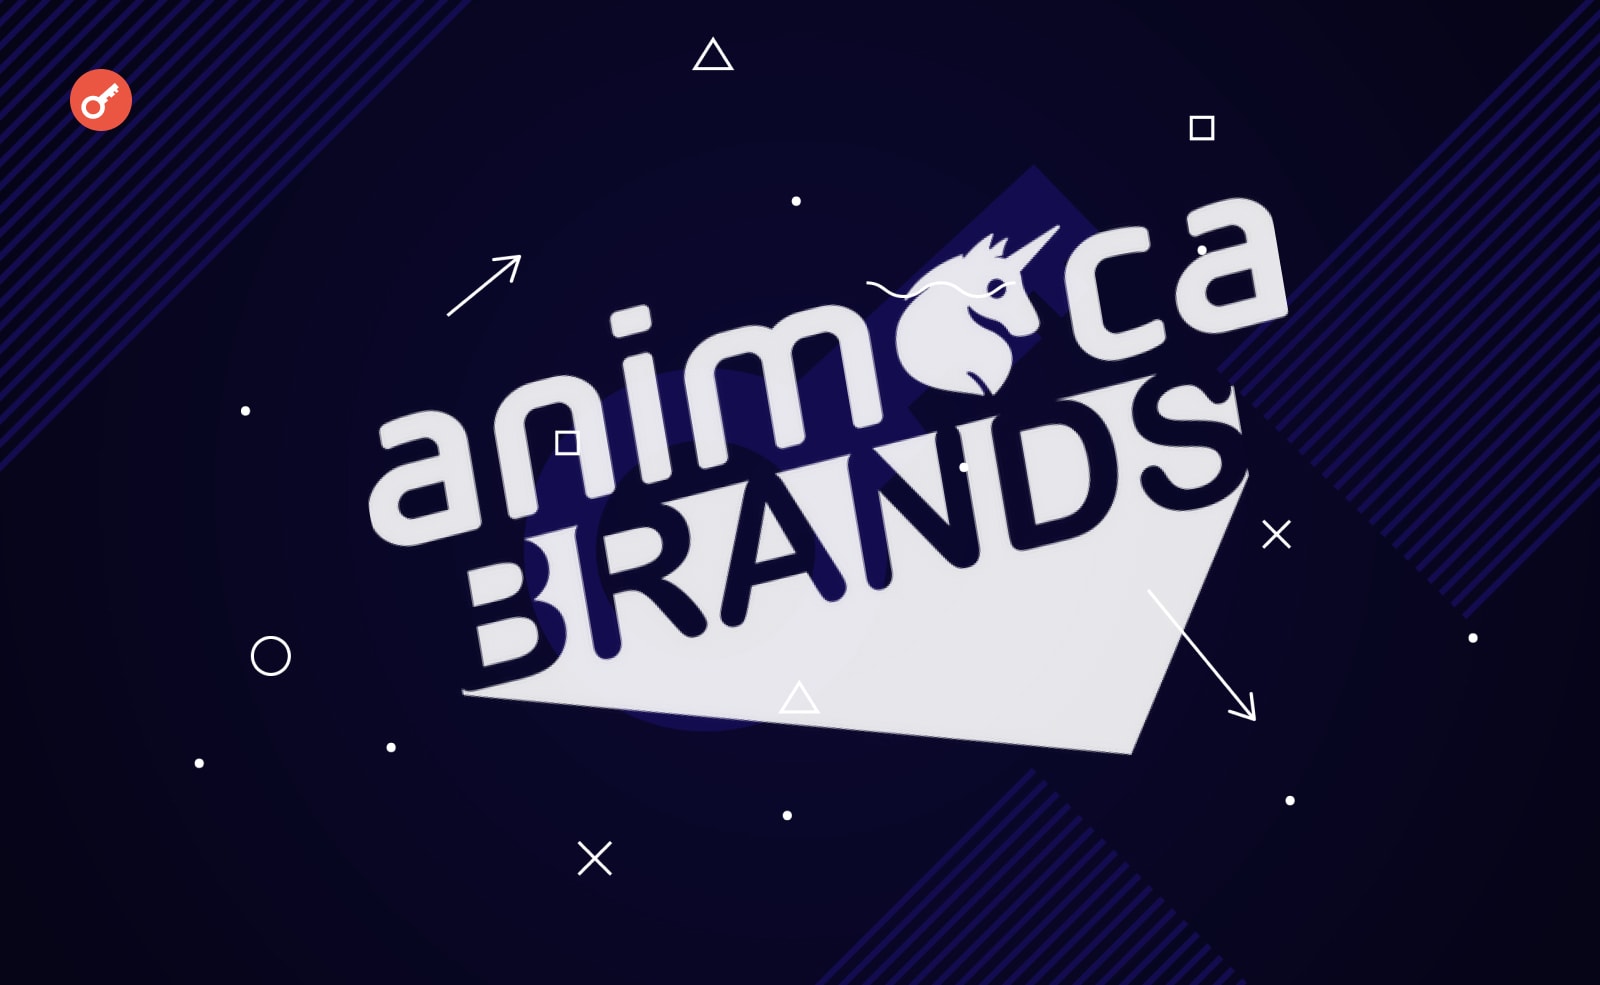 Animoca Brands